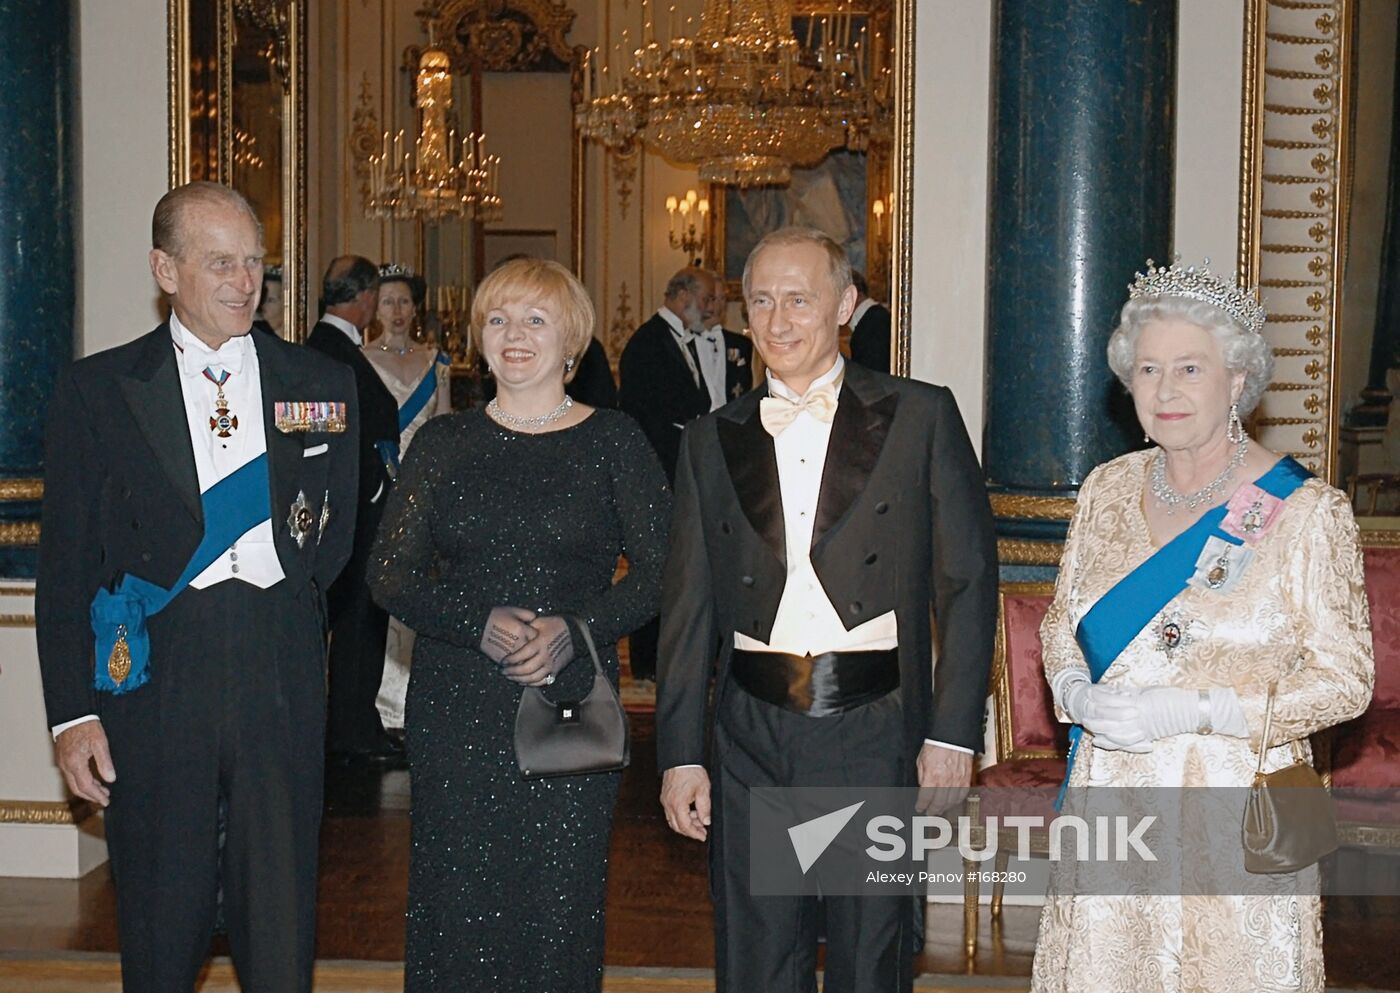 Putin Mrs. Putin Elizabeth II Philip reception Buckingham Palace